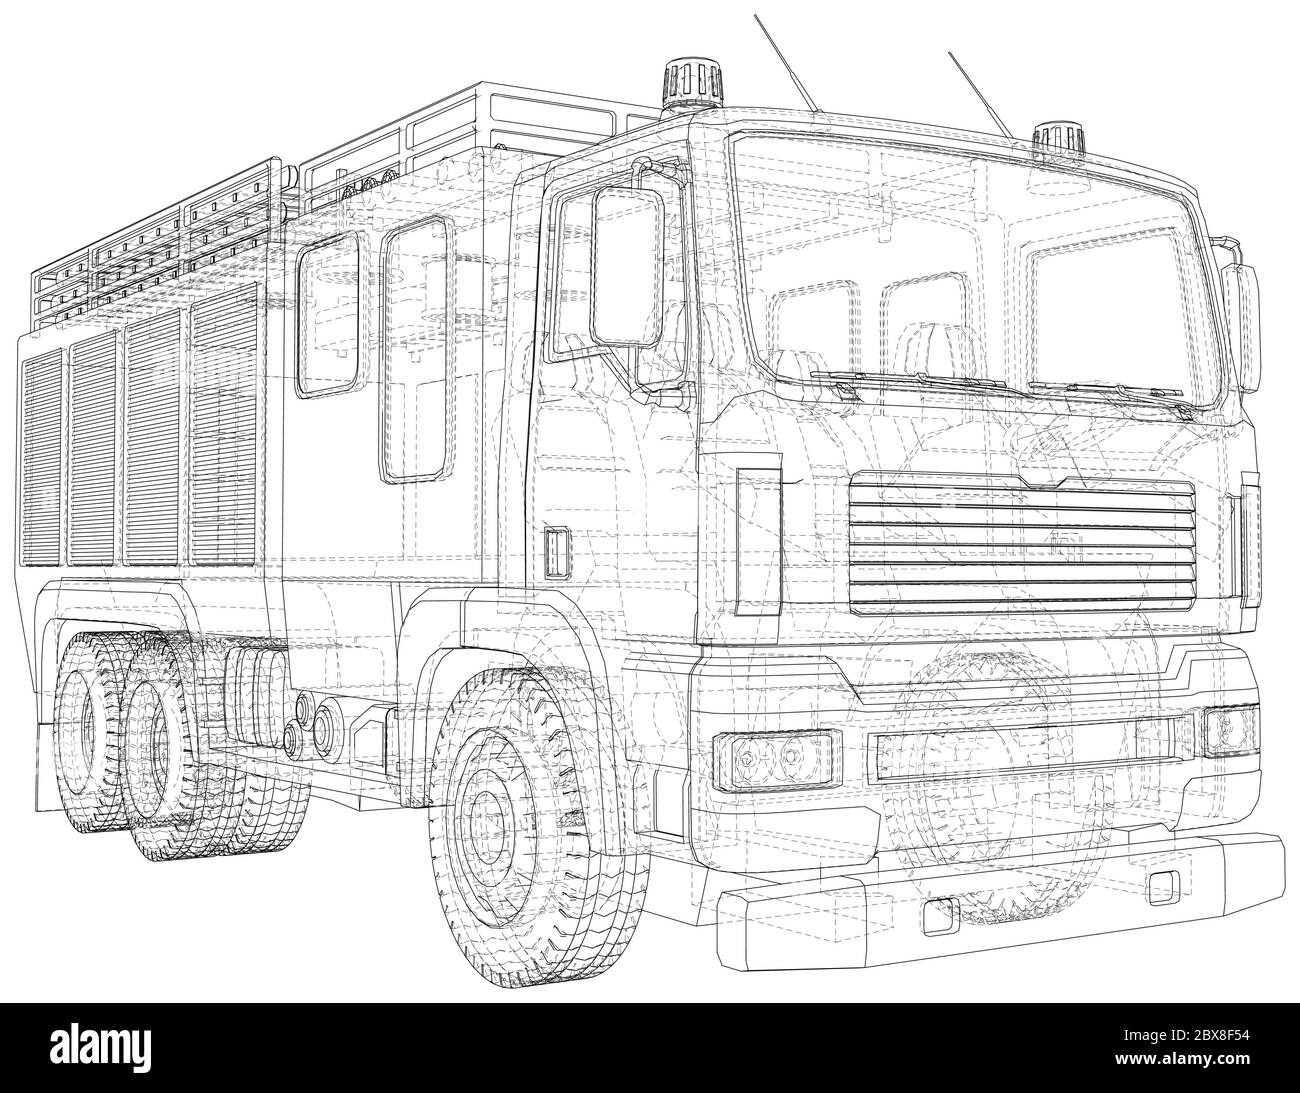 Cartoon Fire Truck Drawing  Fire truck drawing Fire trucks Car drawing  easy